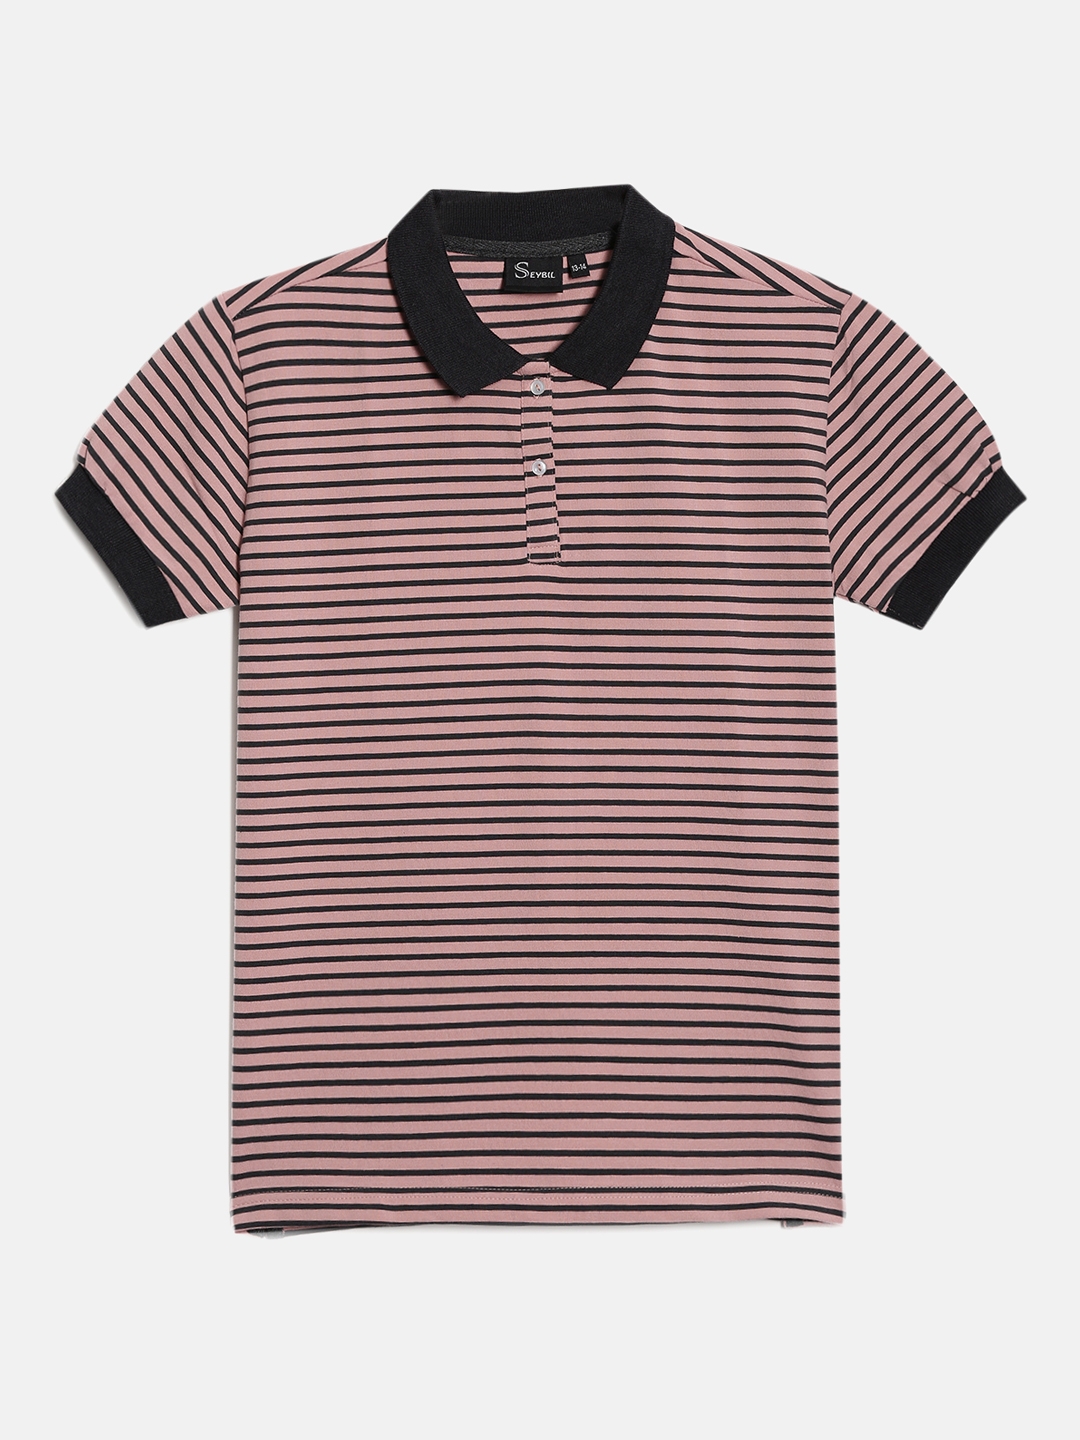 SEYBIL | Seybil Teen girls Pink cotton striped polo Tshirt